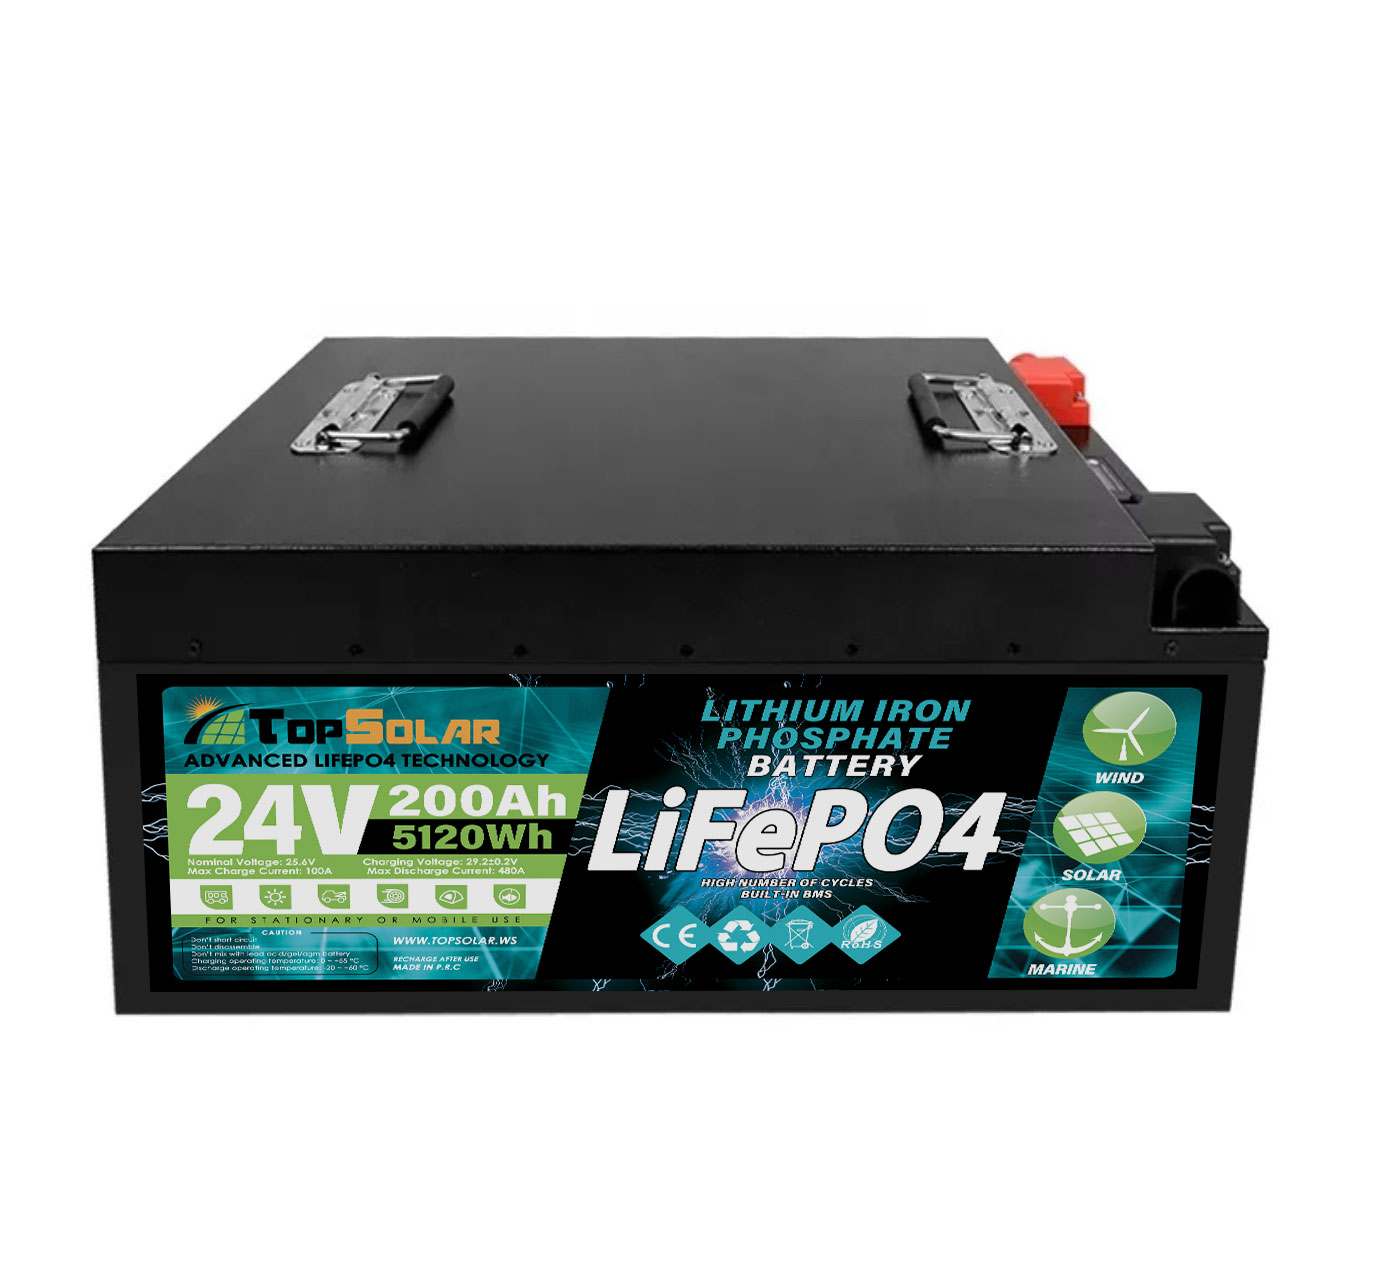 Batterie Lithium LiFePO4 12V 100Ah, série EcoWatt